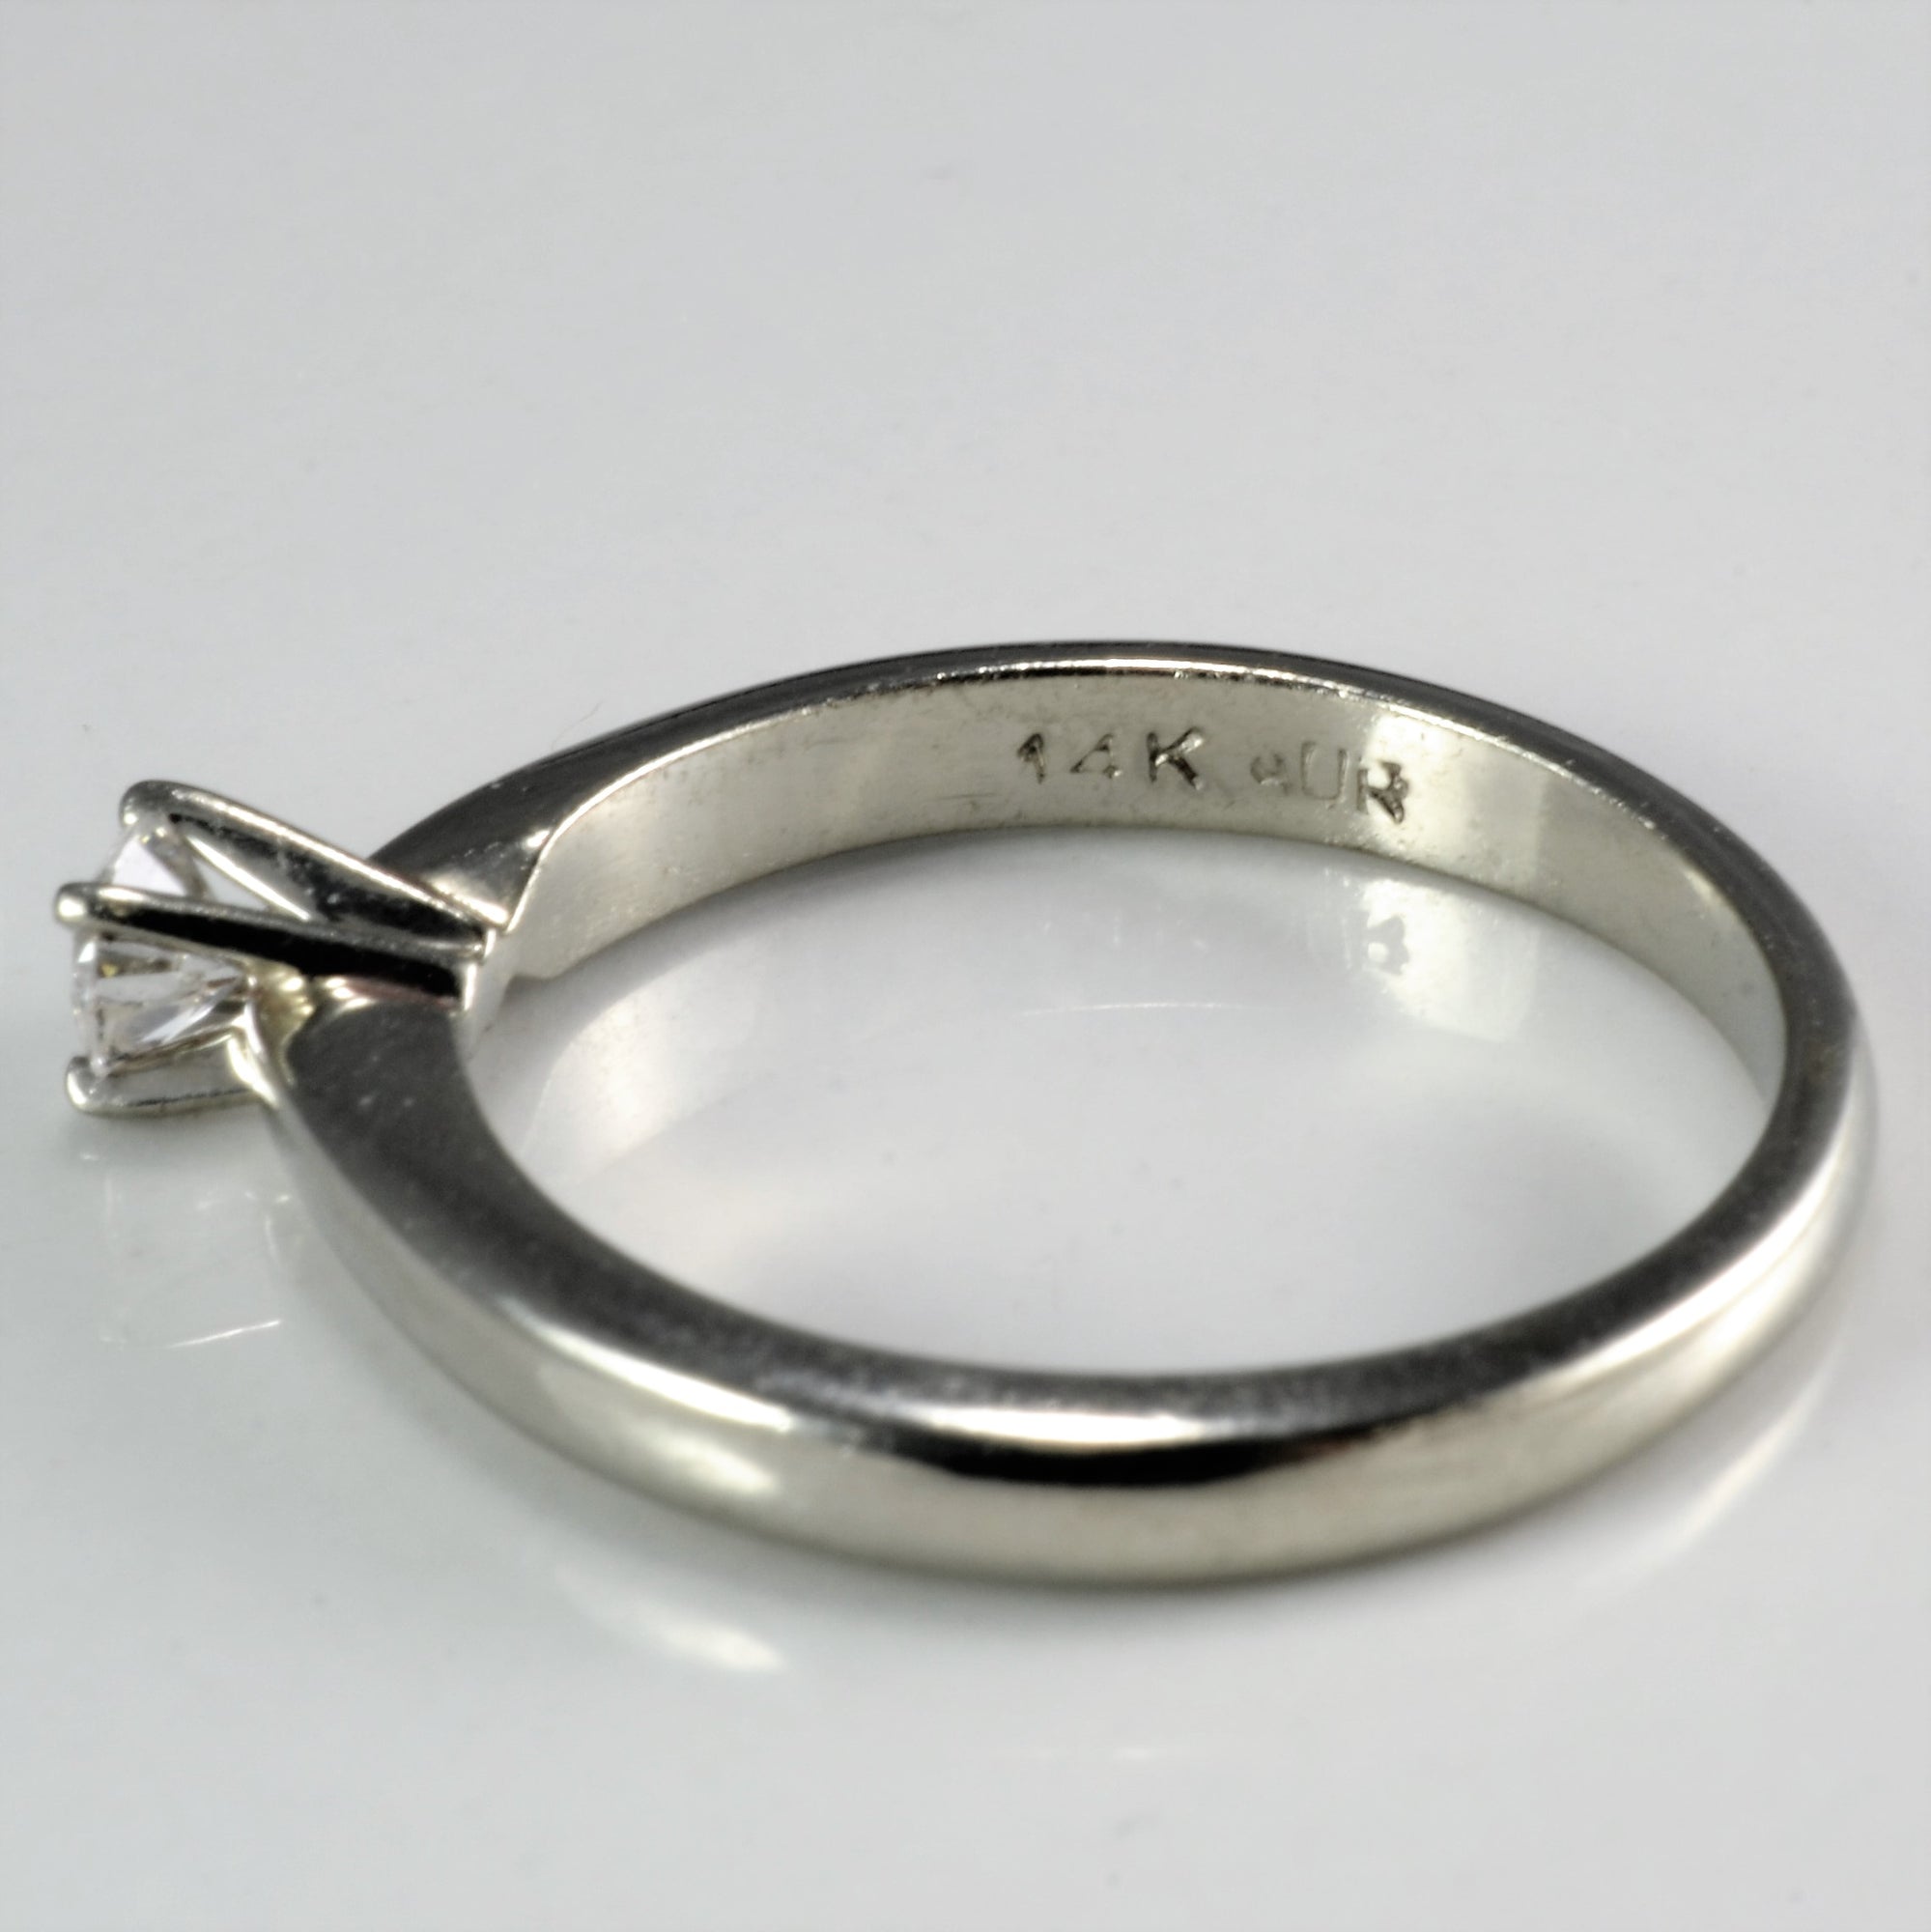 Petite Solitaire Diamond Ring | 0.14 ct, SZ 5 |